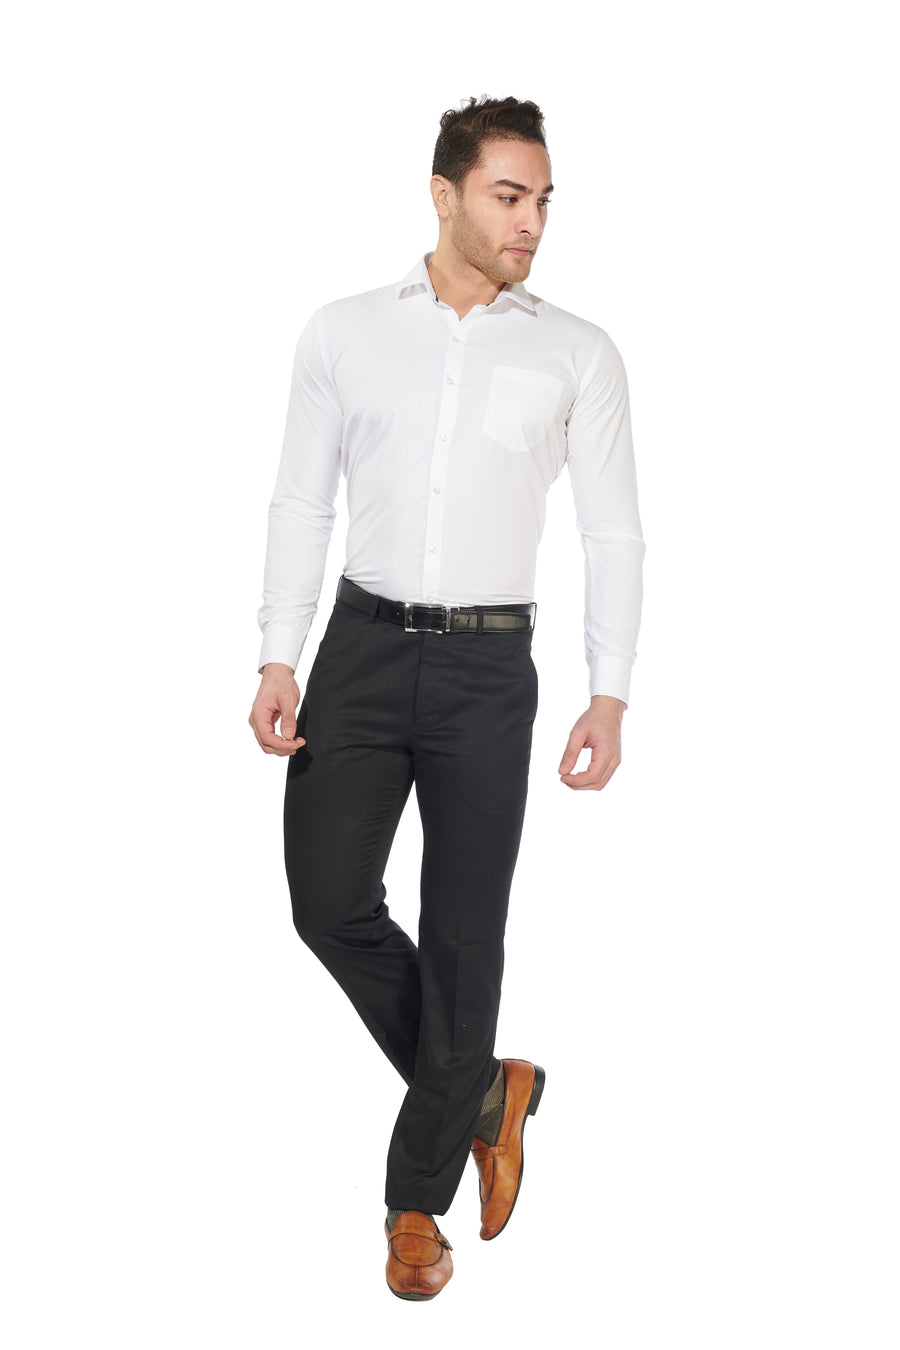 Whitiest White | Mens Slim-Fit Shirt